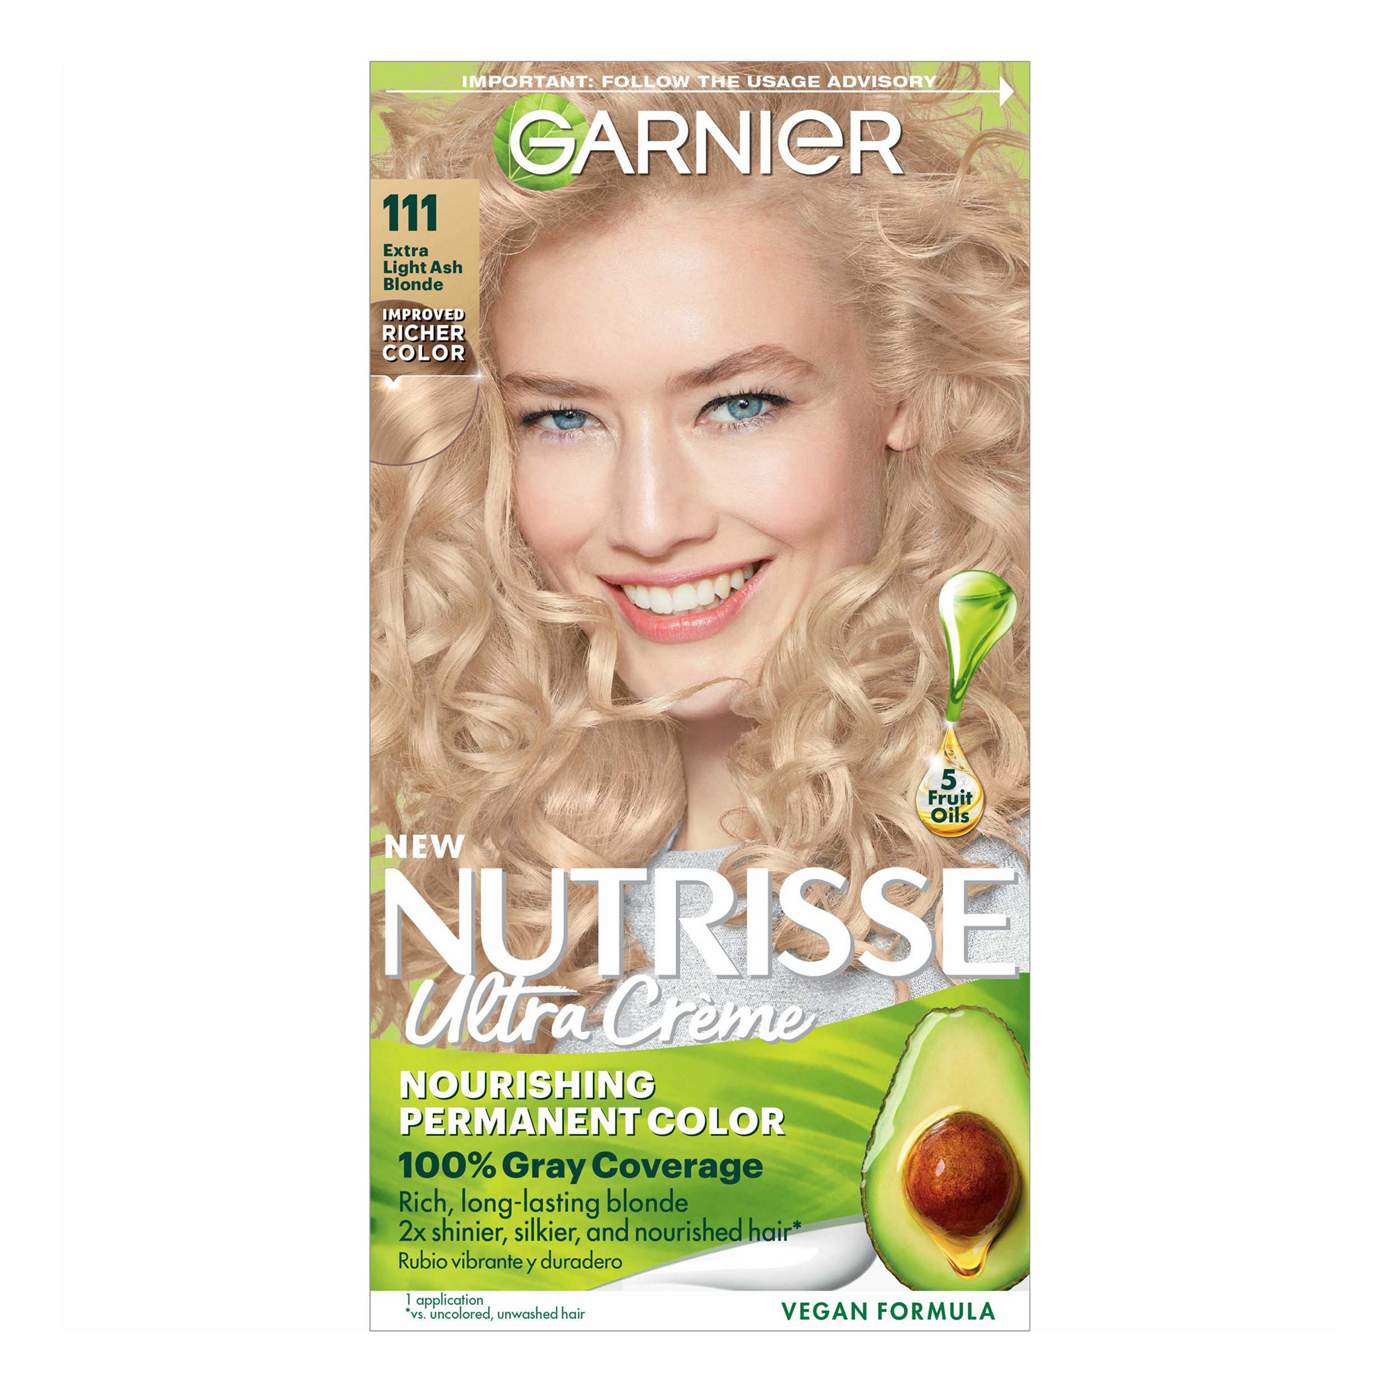 Garnier Nutrisse Nourishing Hair Color Creme - 111 Extra Light Ash Blonde; image 1 of 8